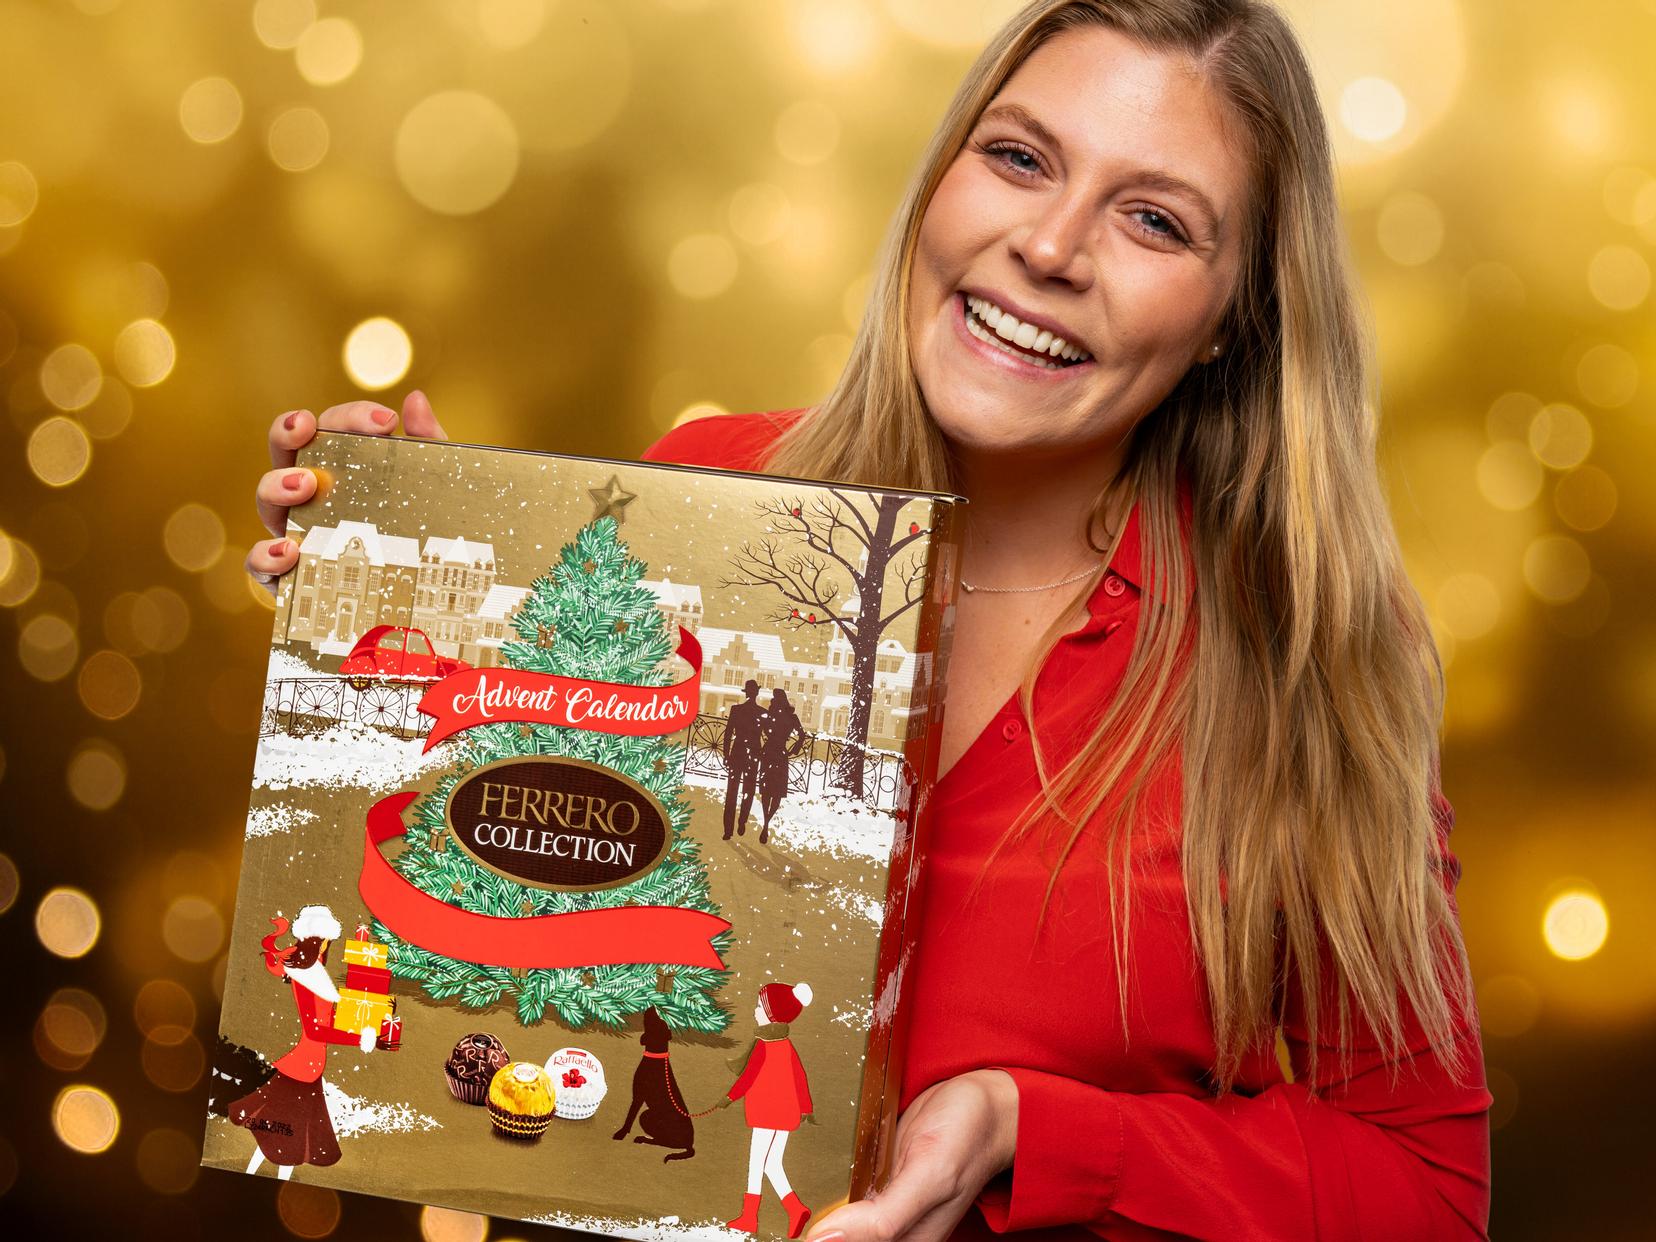 Ferrero Collection Joulukalenteri-image